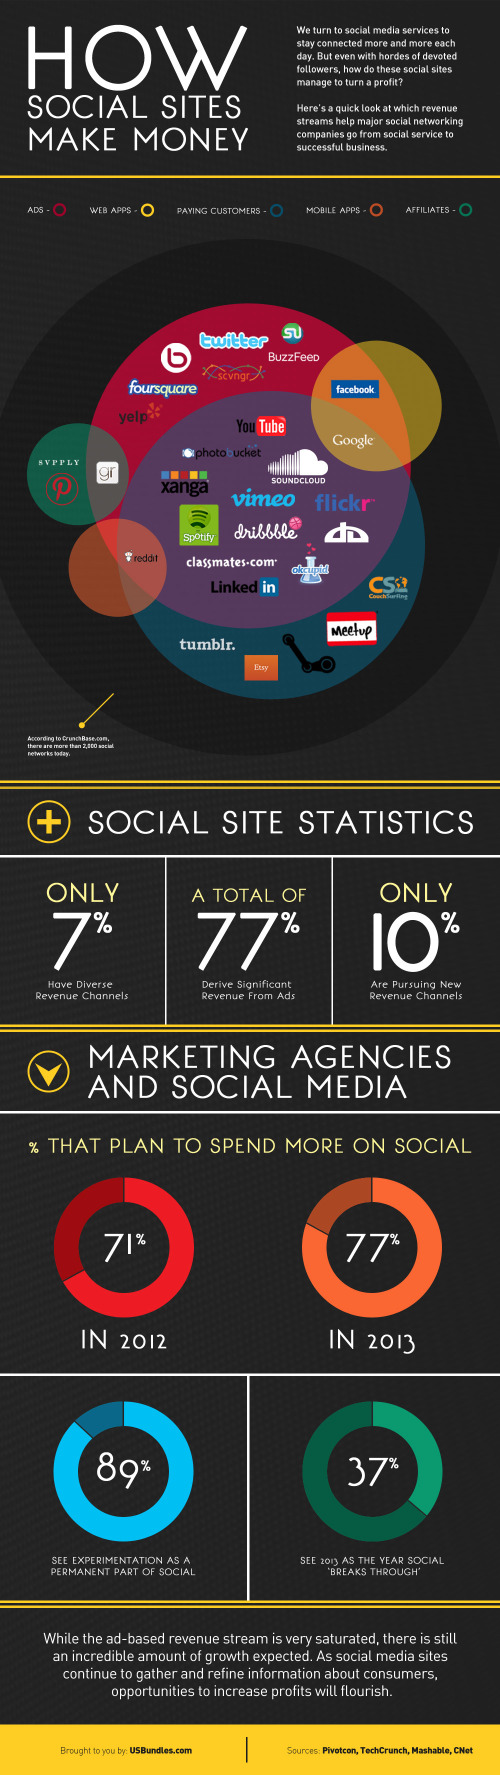 How Social Sites Make Money infographic